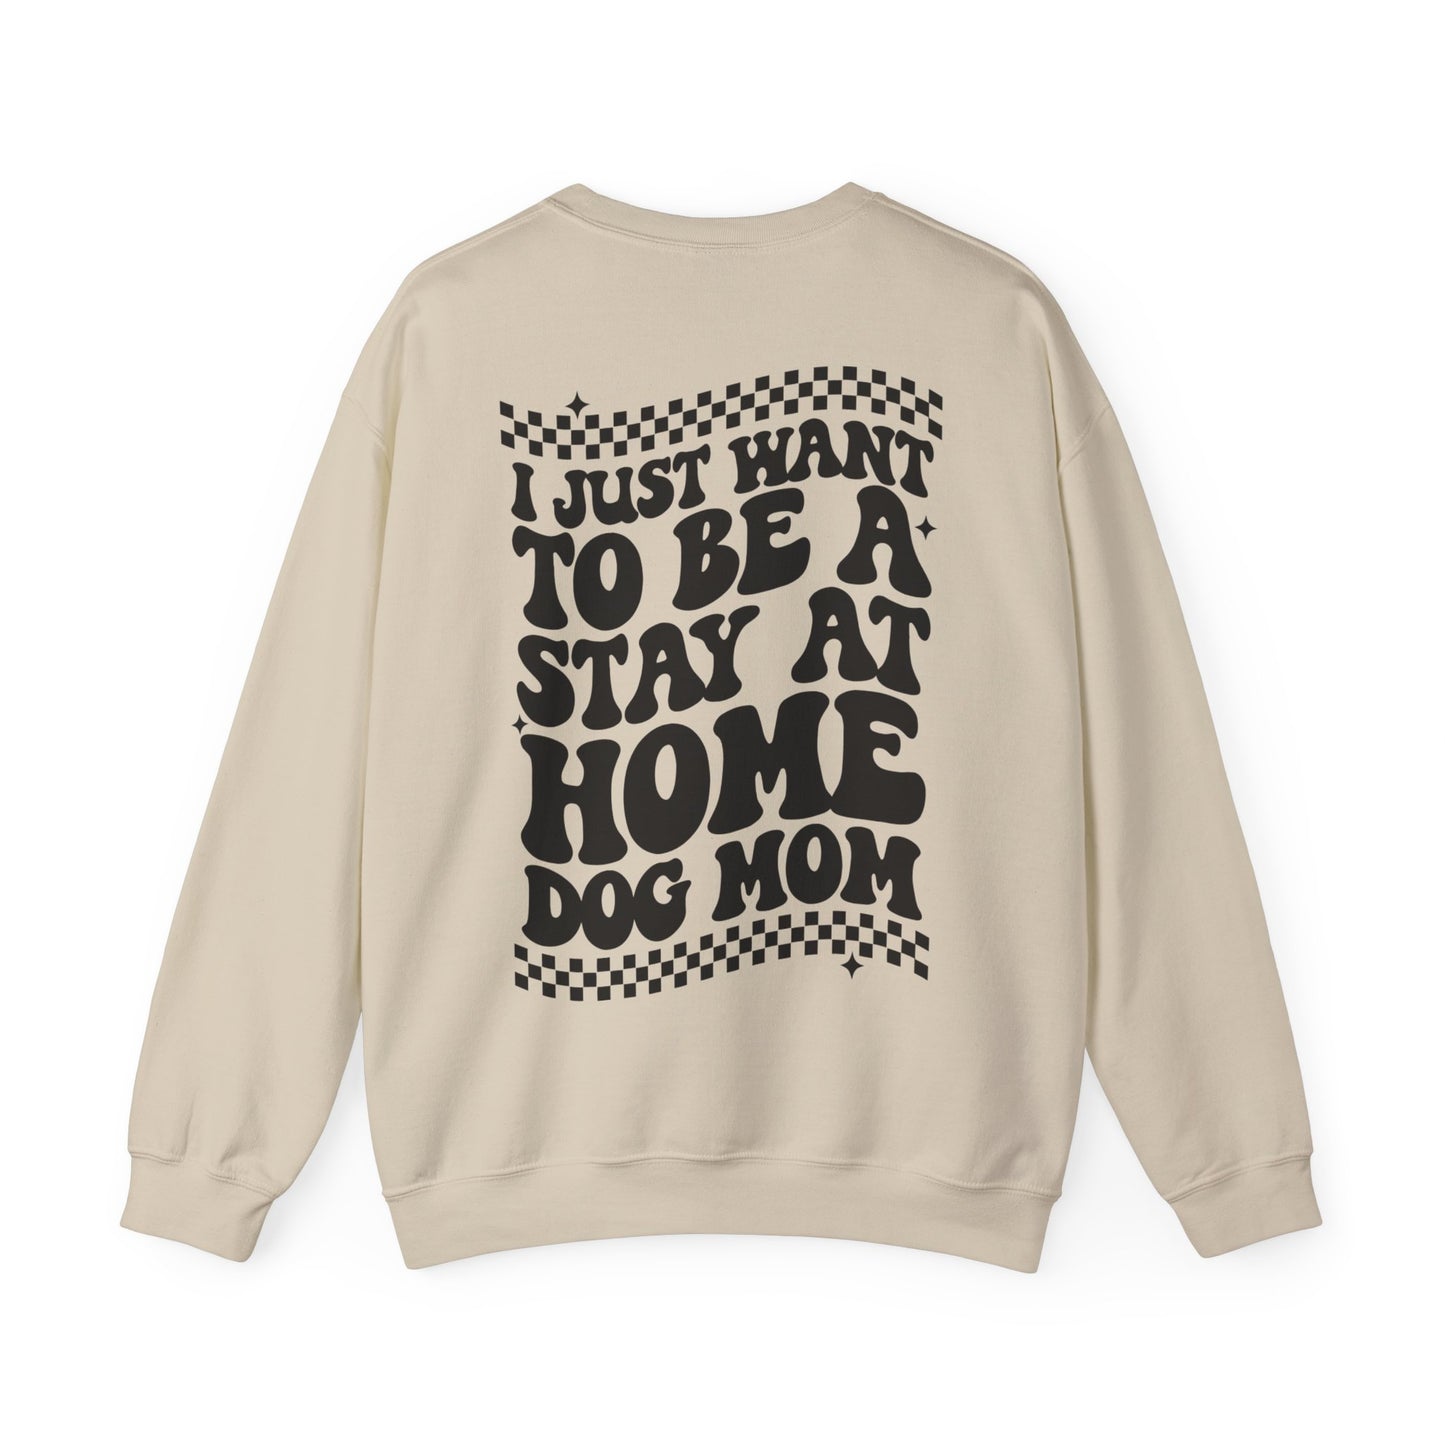 Stay at home dog mom - Crewneck Sweatshirt